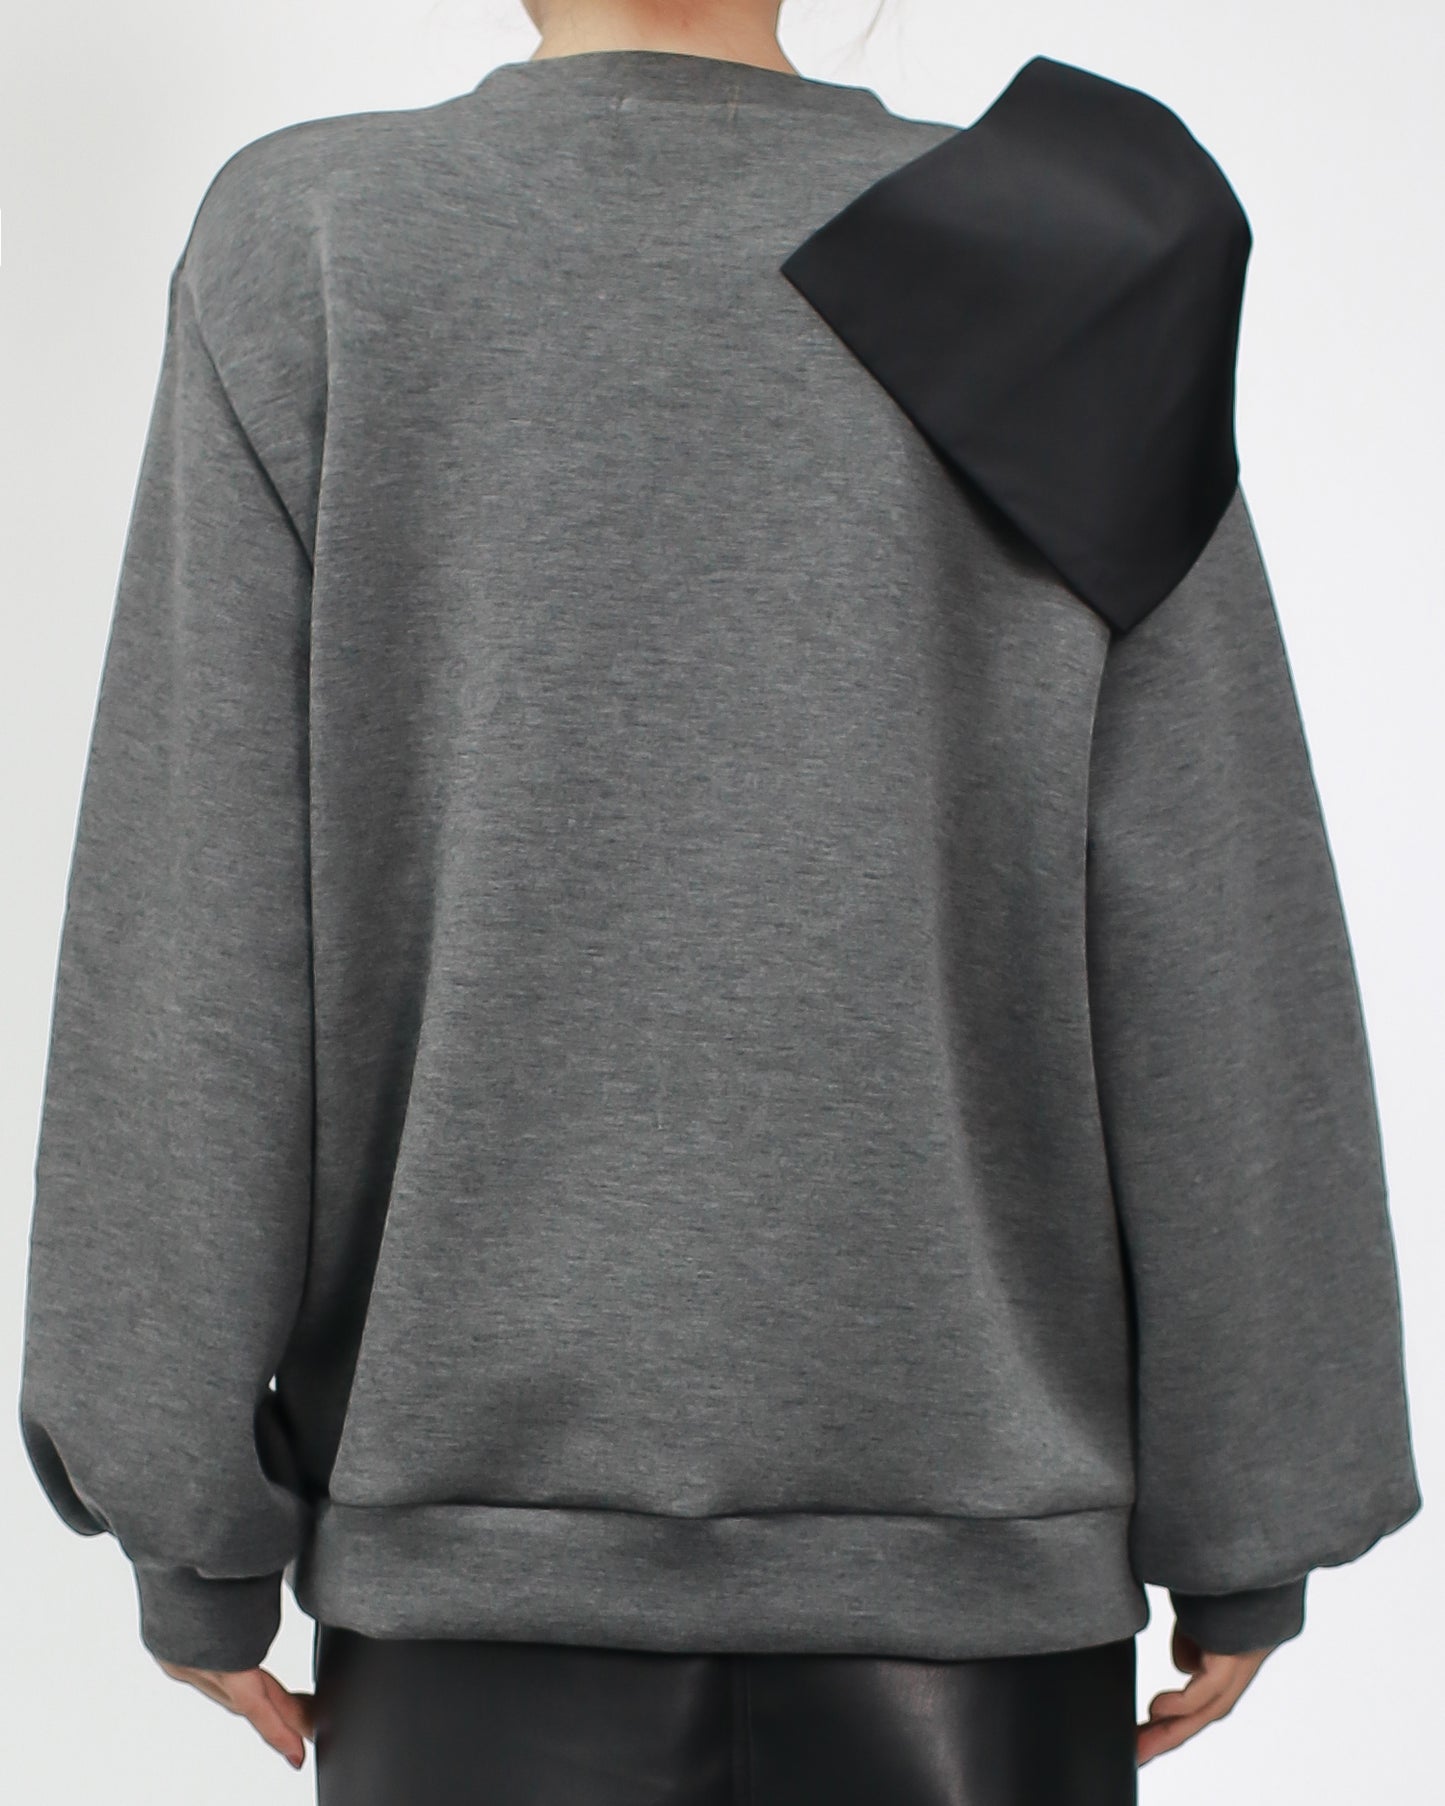 grey neoprene sweatshirt with black bow side *pre-order*